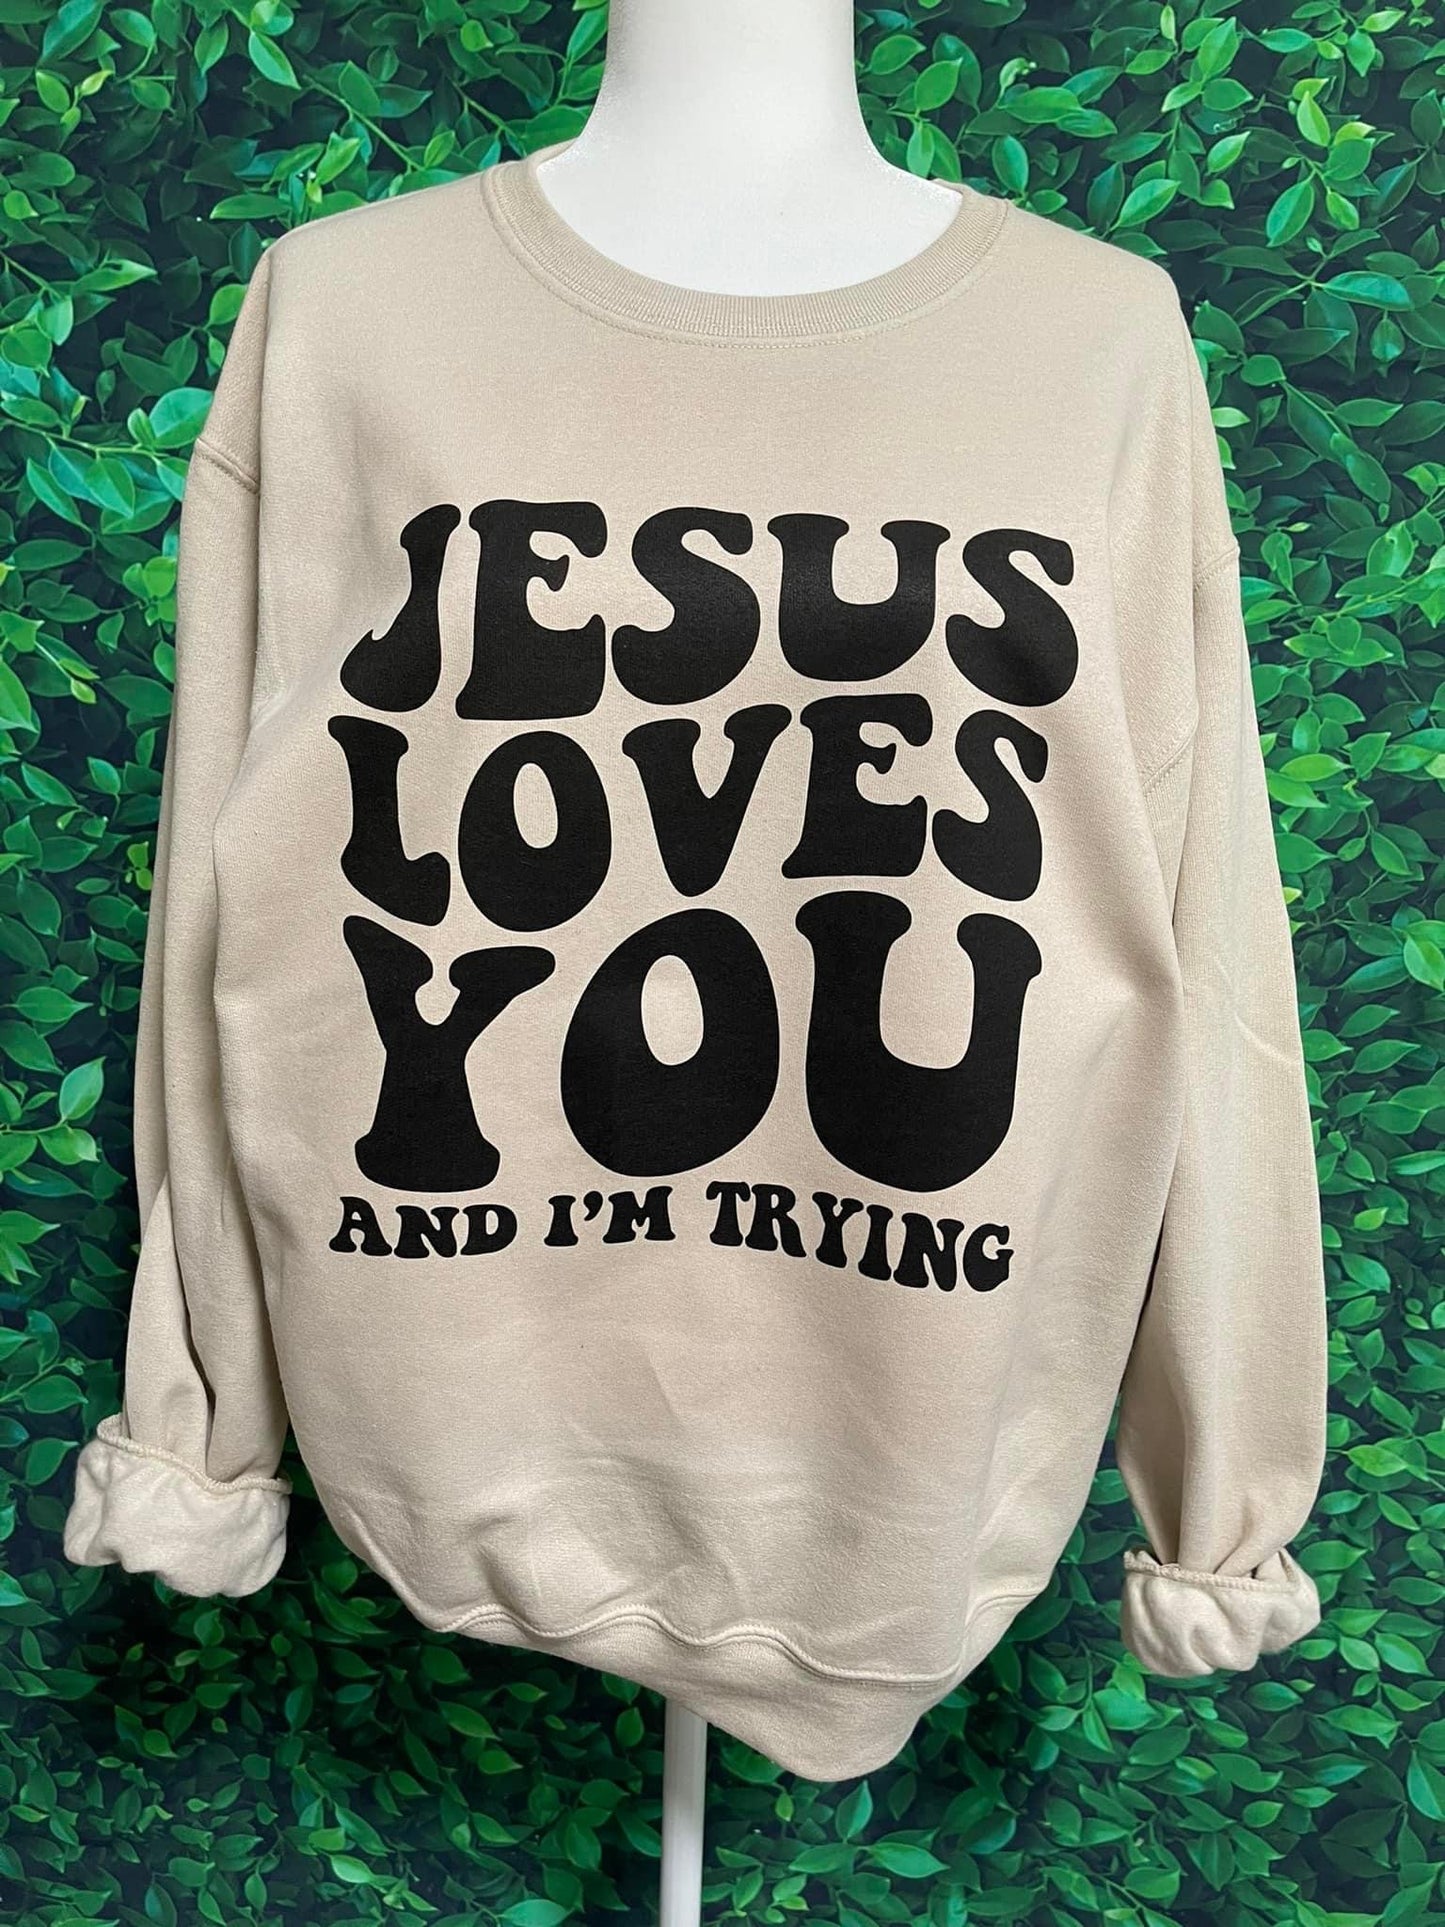 Jesus loves you sweatshirt